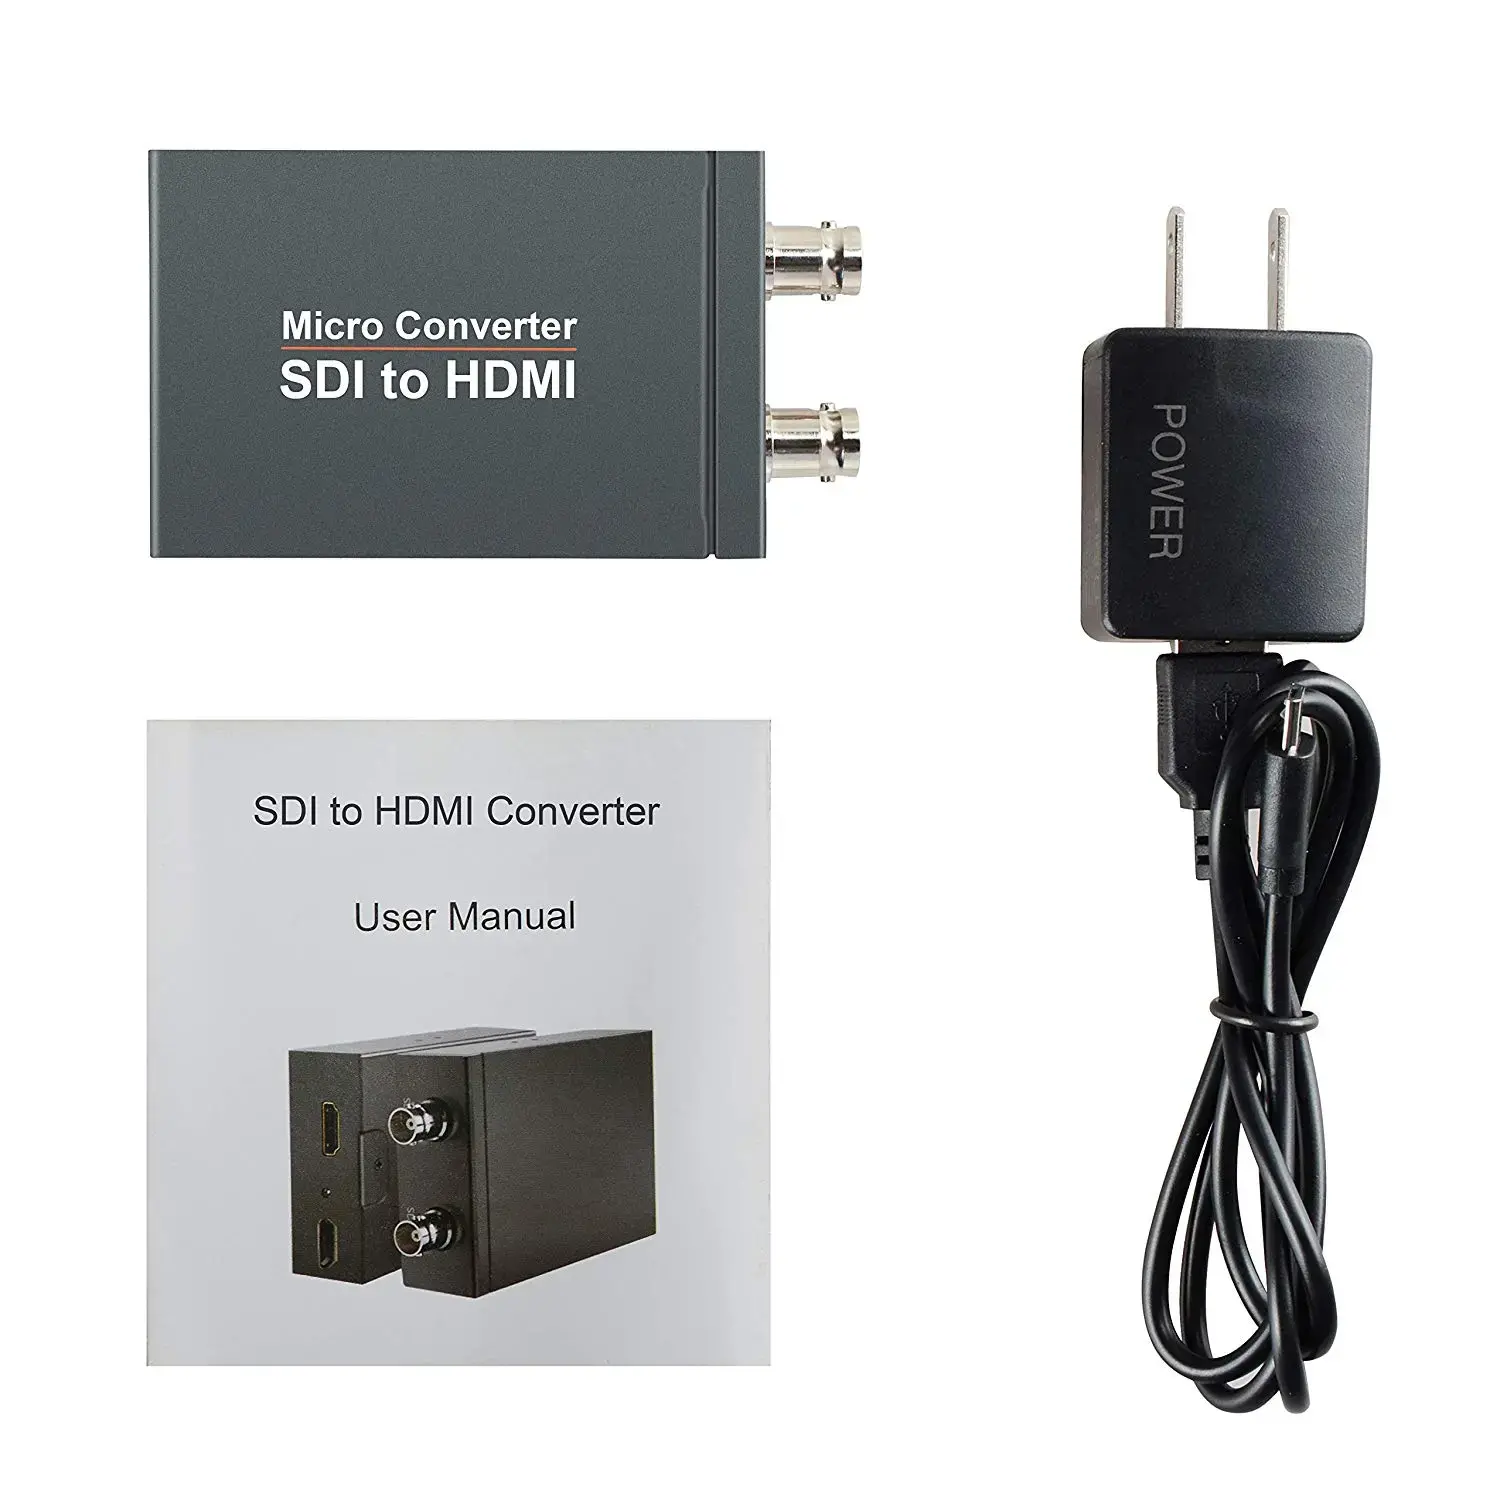 SDI to HDMI Converters